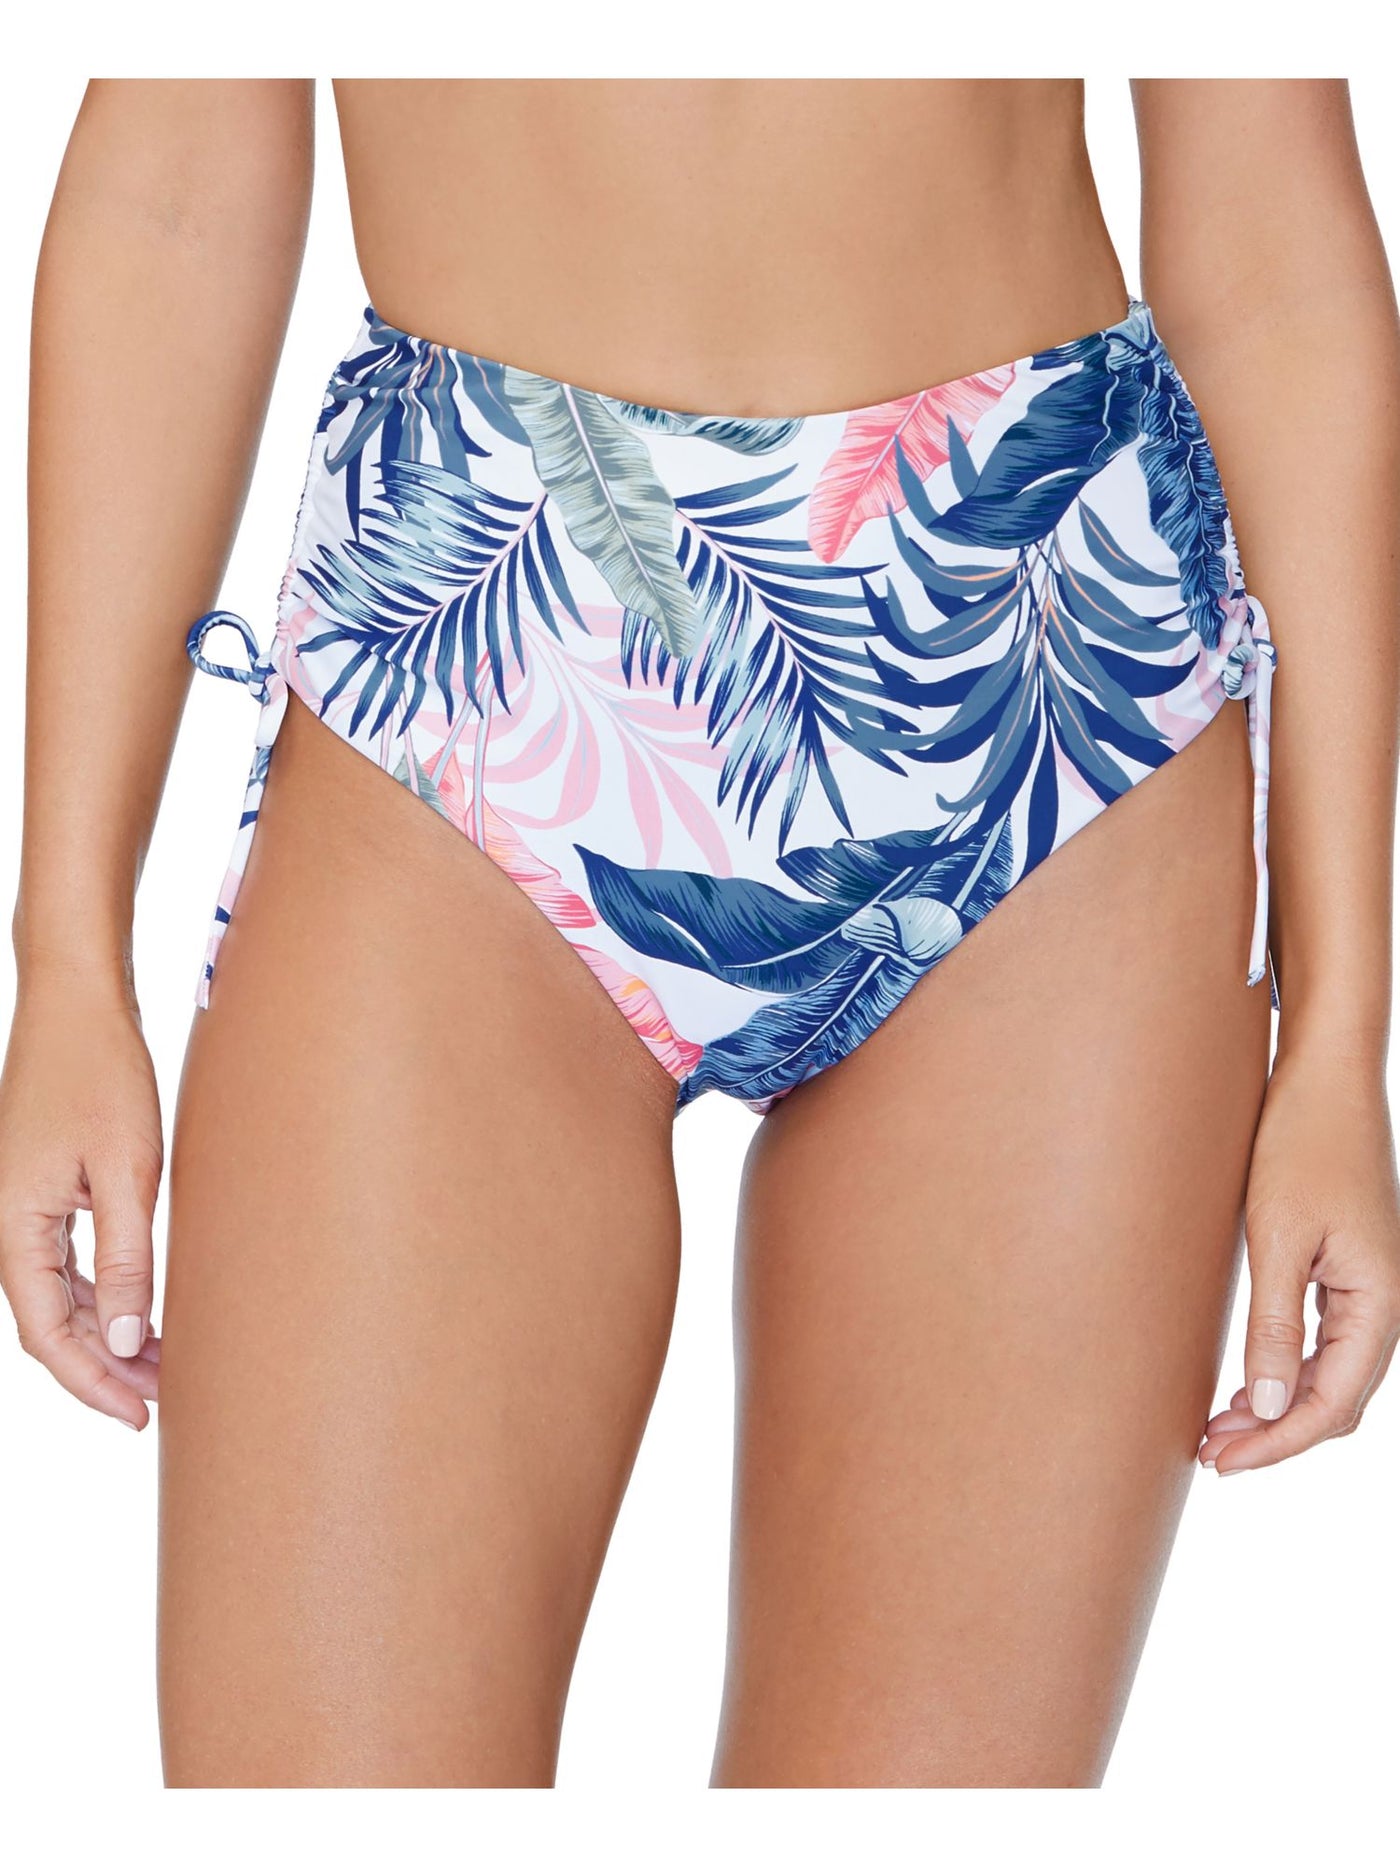 RAISINS Women's Blue Palm Print Stretch Drawstring Ruched Lined Bikini Moderate Coverage Tie Not So Bora Bora High Waisted Swimsuit Bottom L